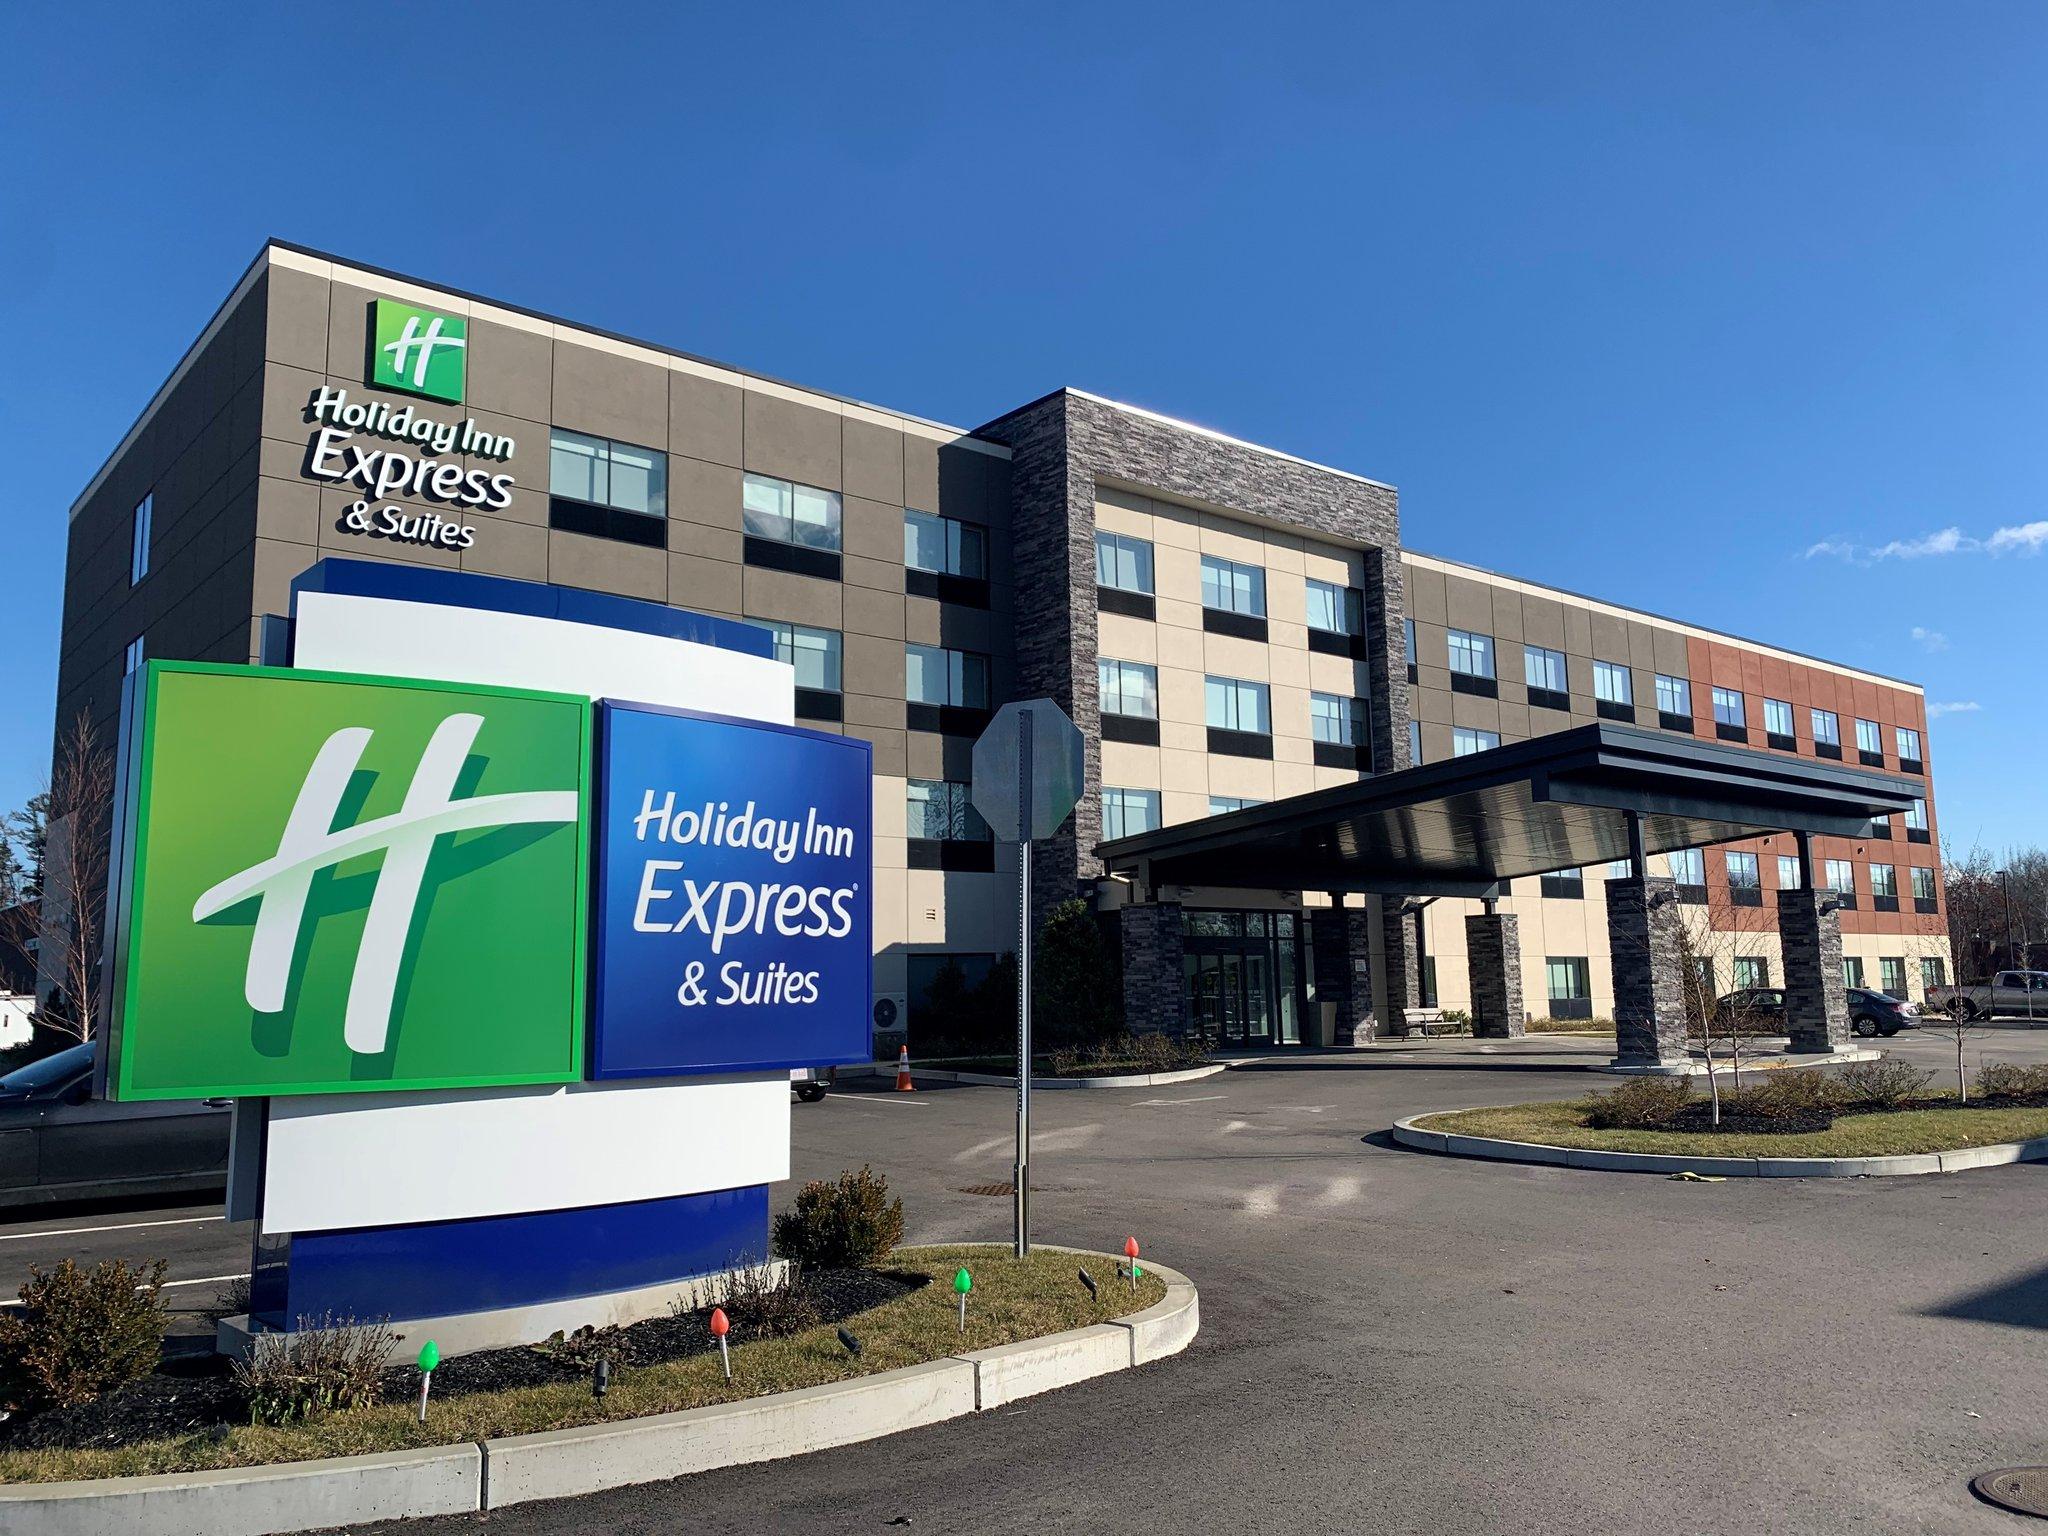 Holiday Inn Express & Suites Boston South - Randolph in Randolph, MA